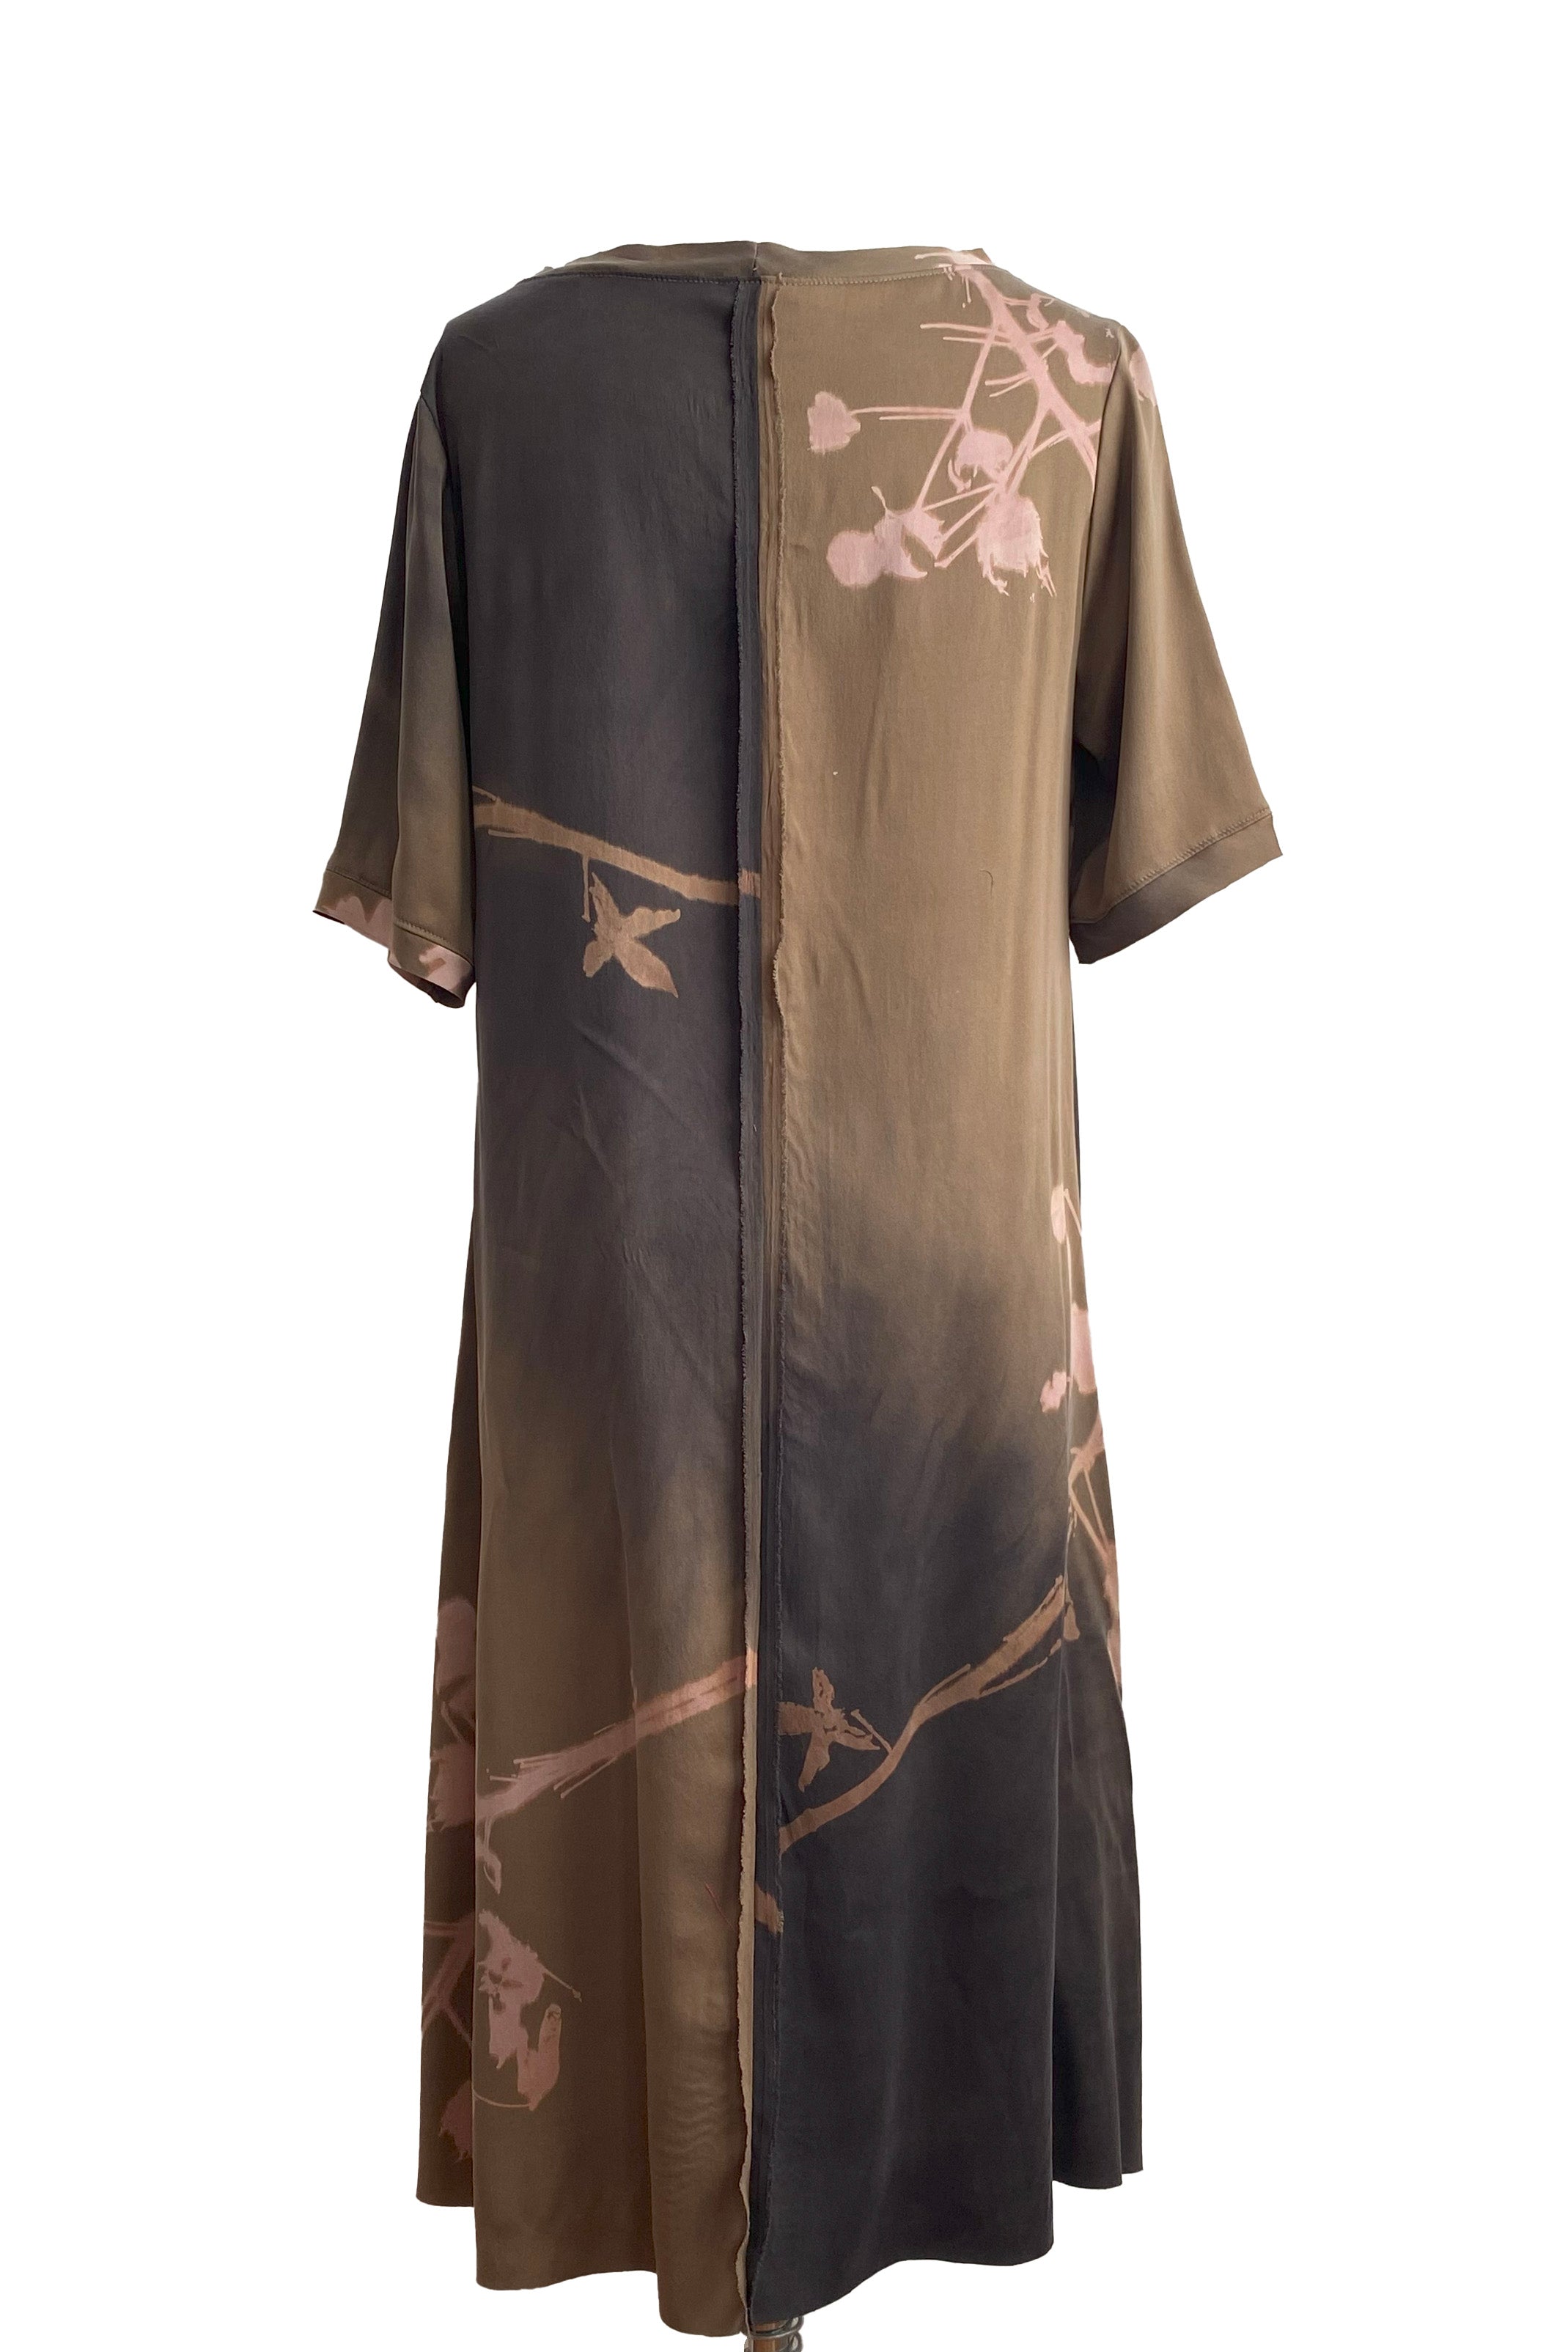 Jazzyfest Dress in Silk w/ Cotton Print - Brown Ombré - Small